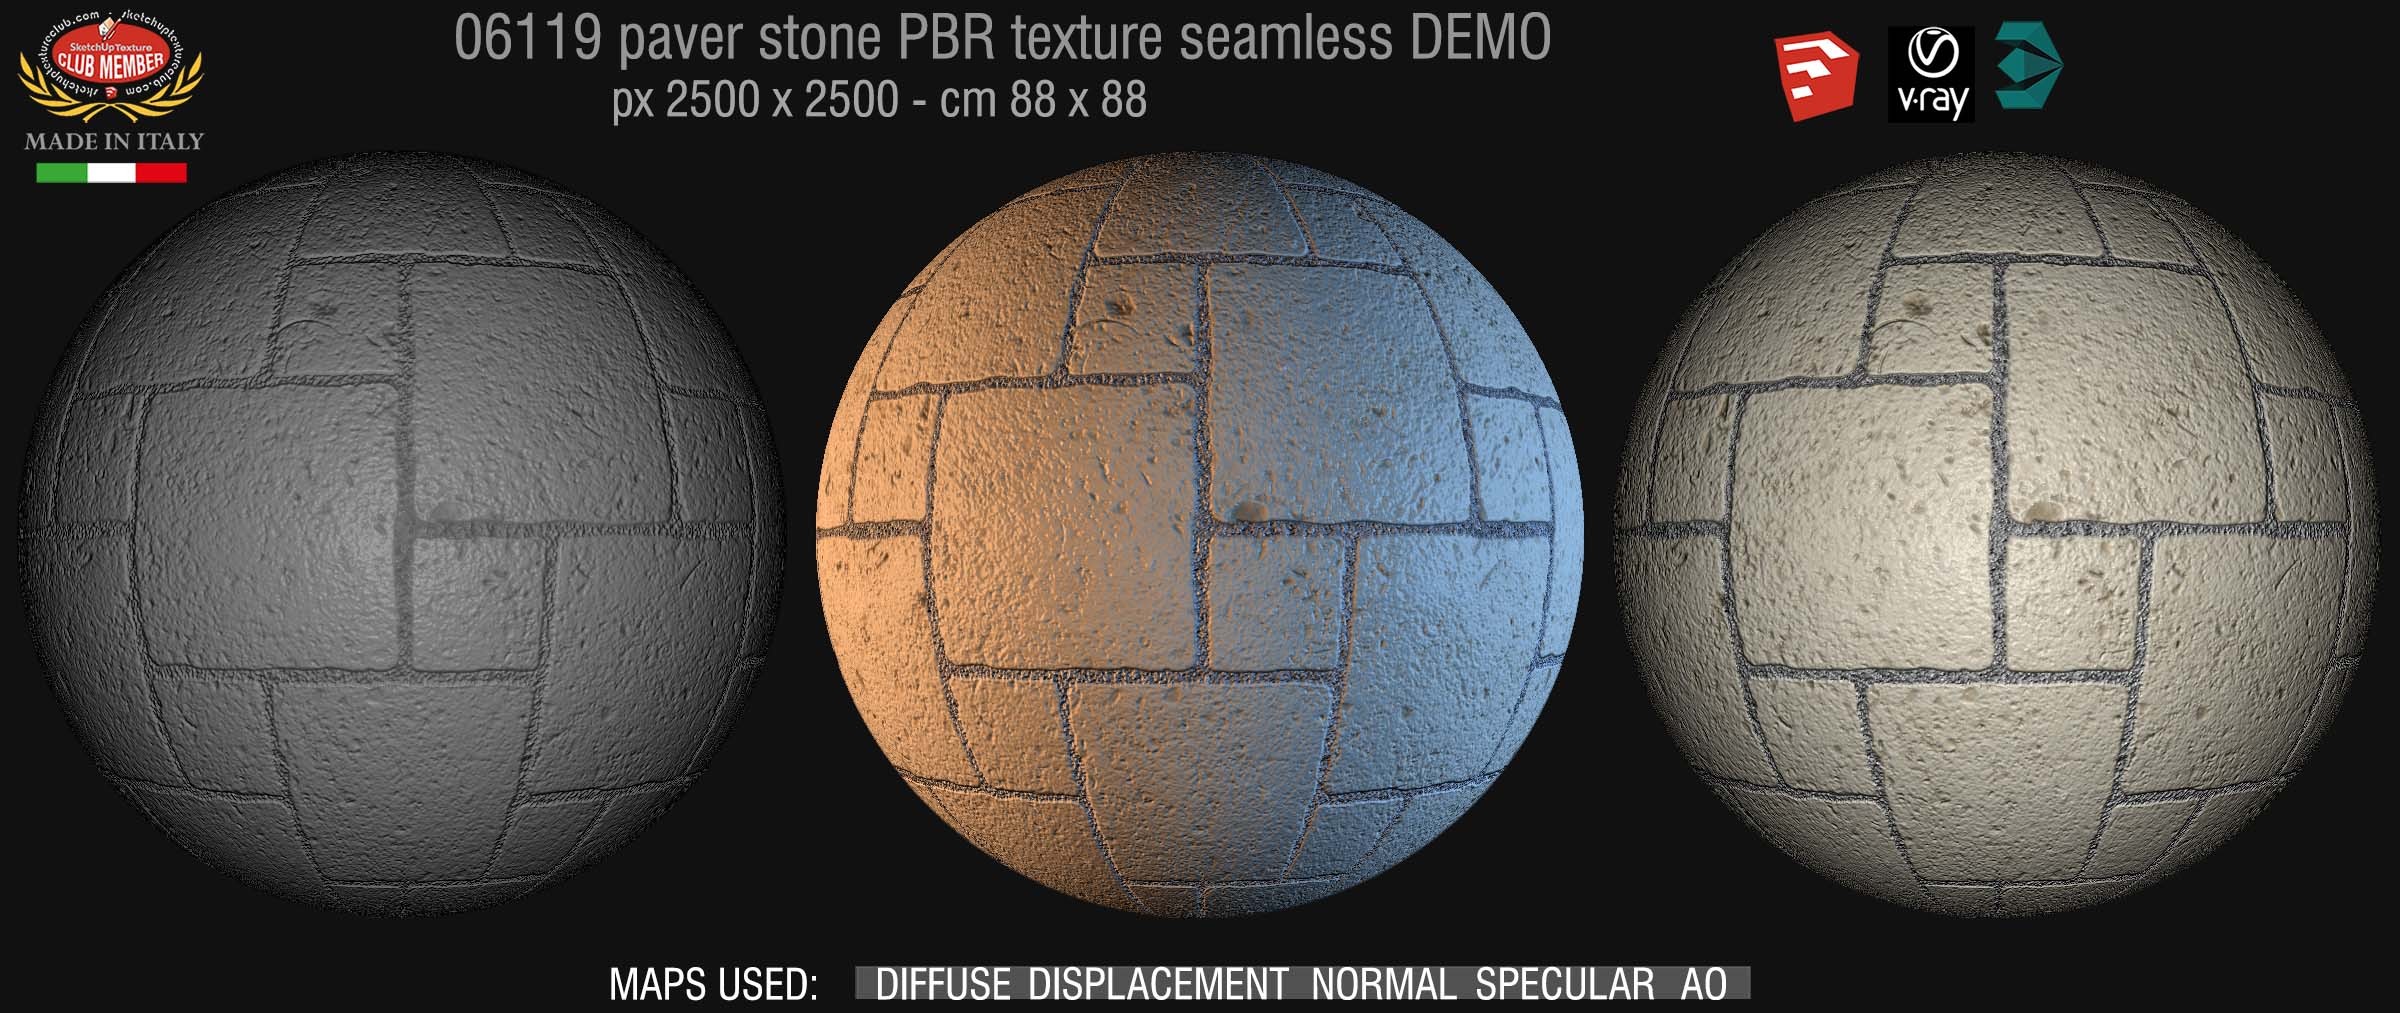 06119 paver stone PBR texture seamless DEMO